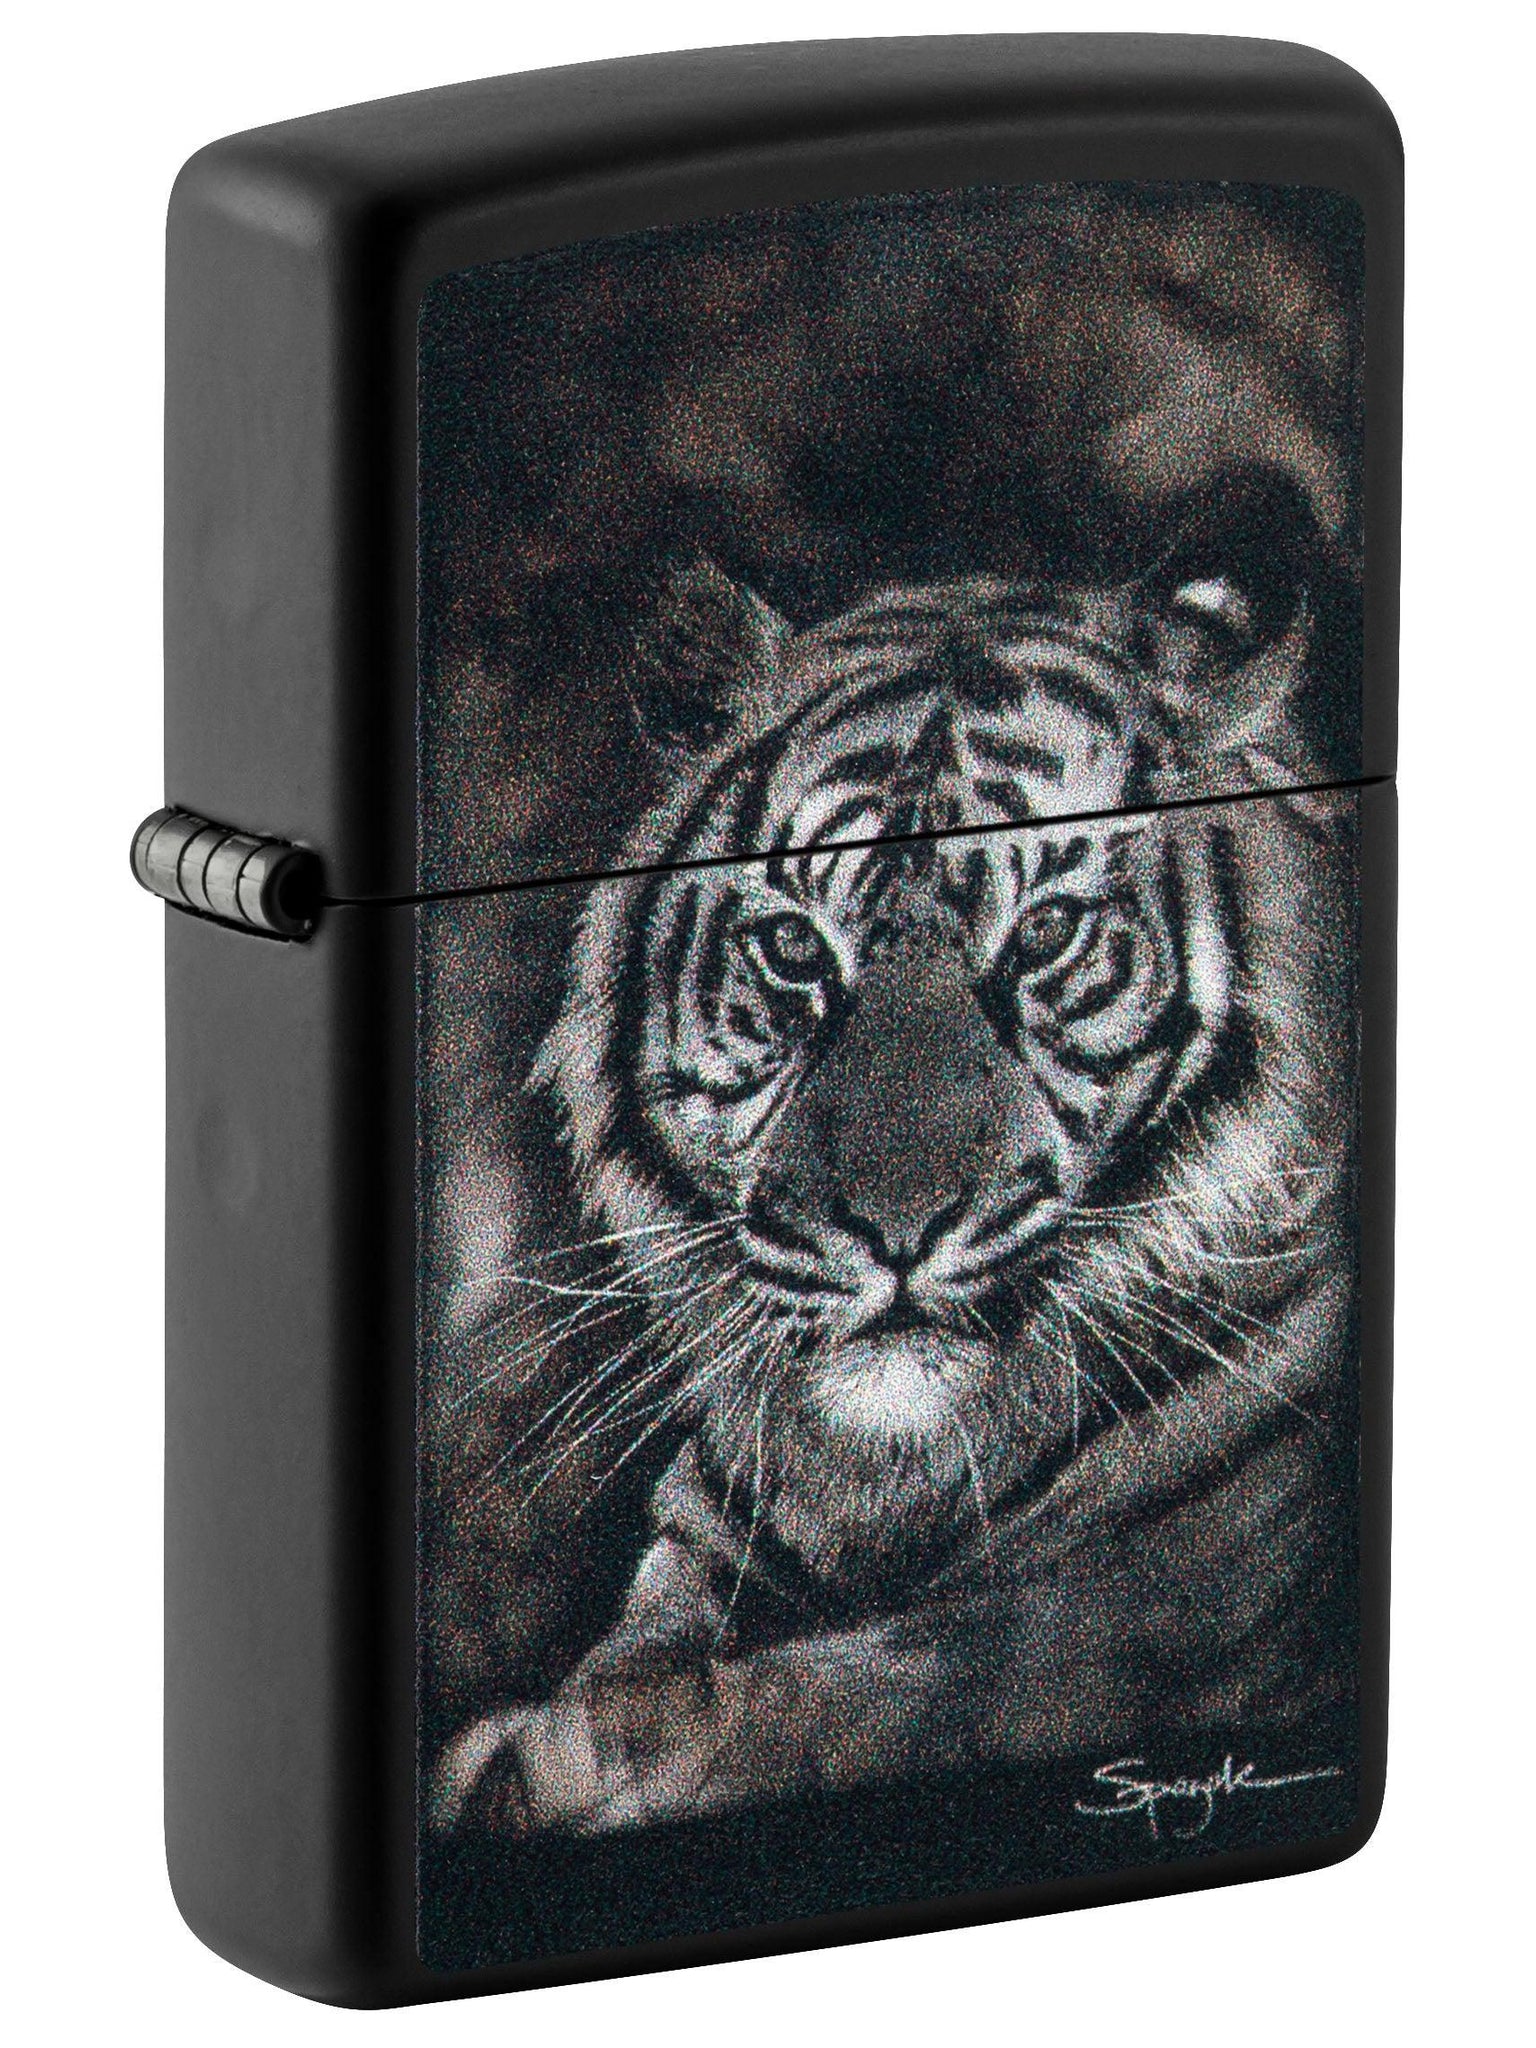 Zippo Lighter: Lion Design by Spazuk - Black Matte 49763